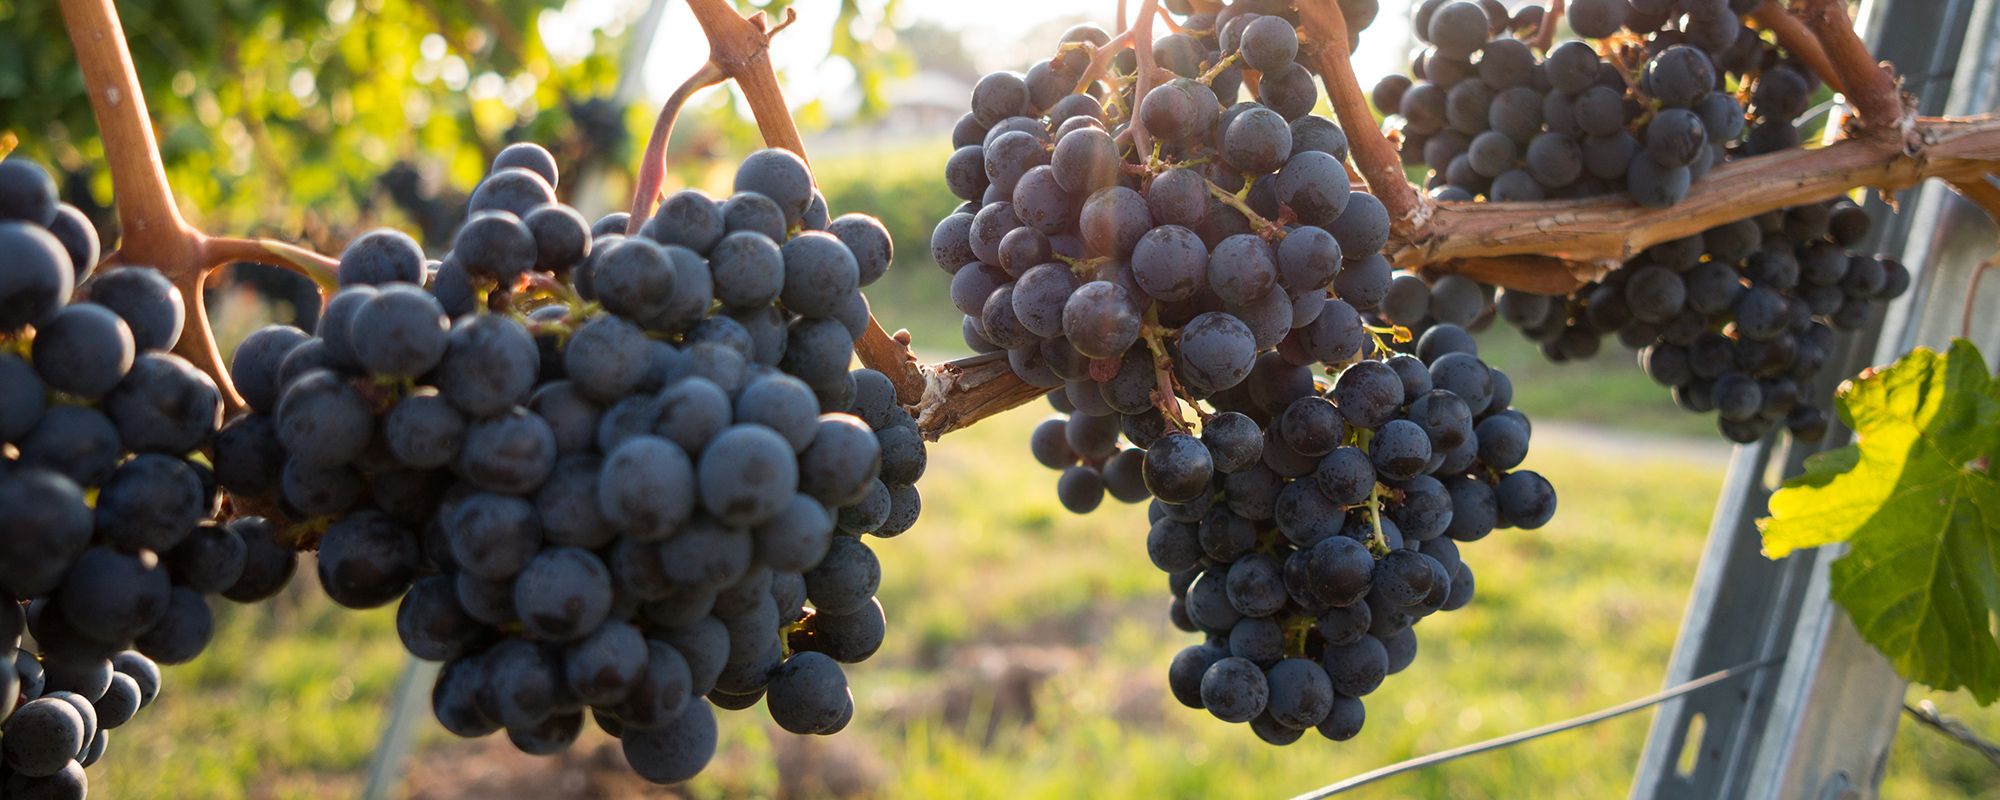 Crops viniculture